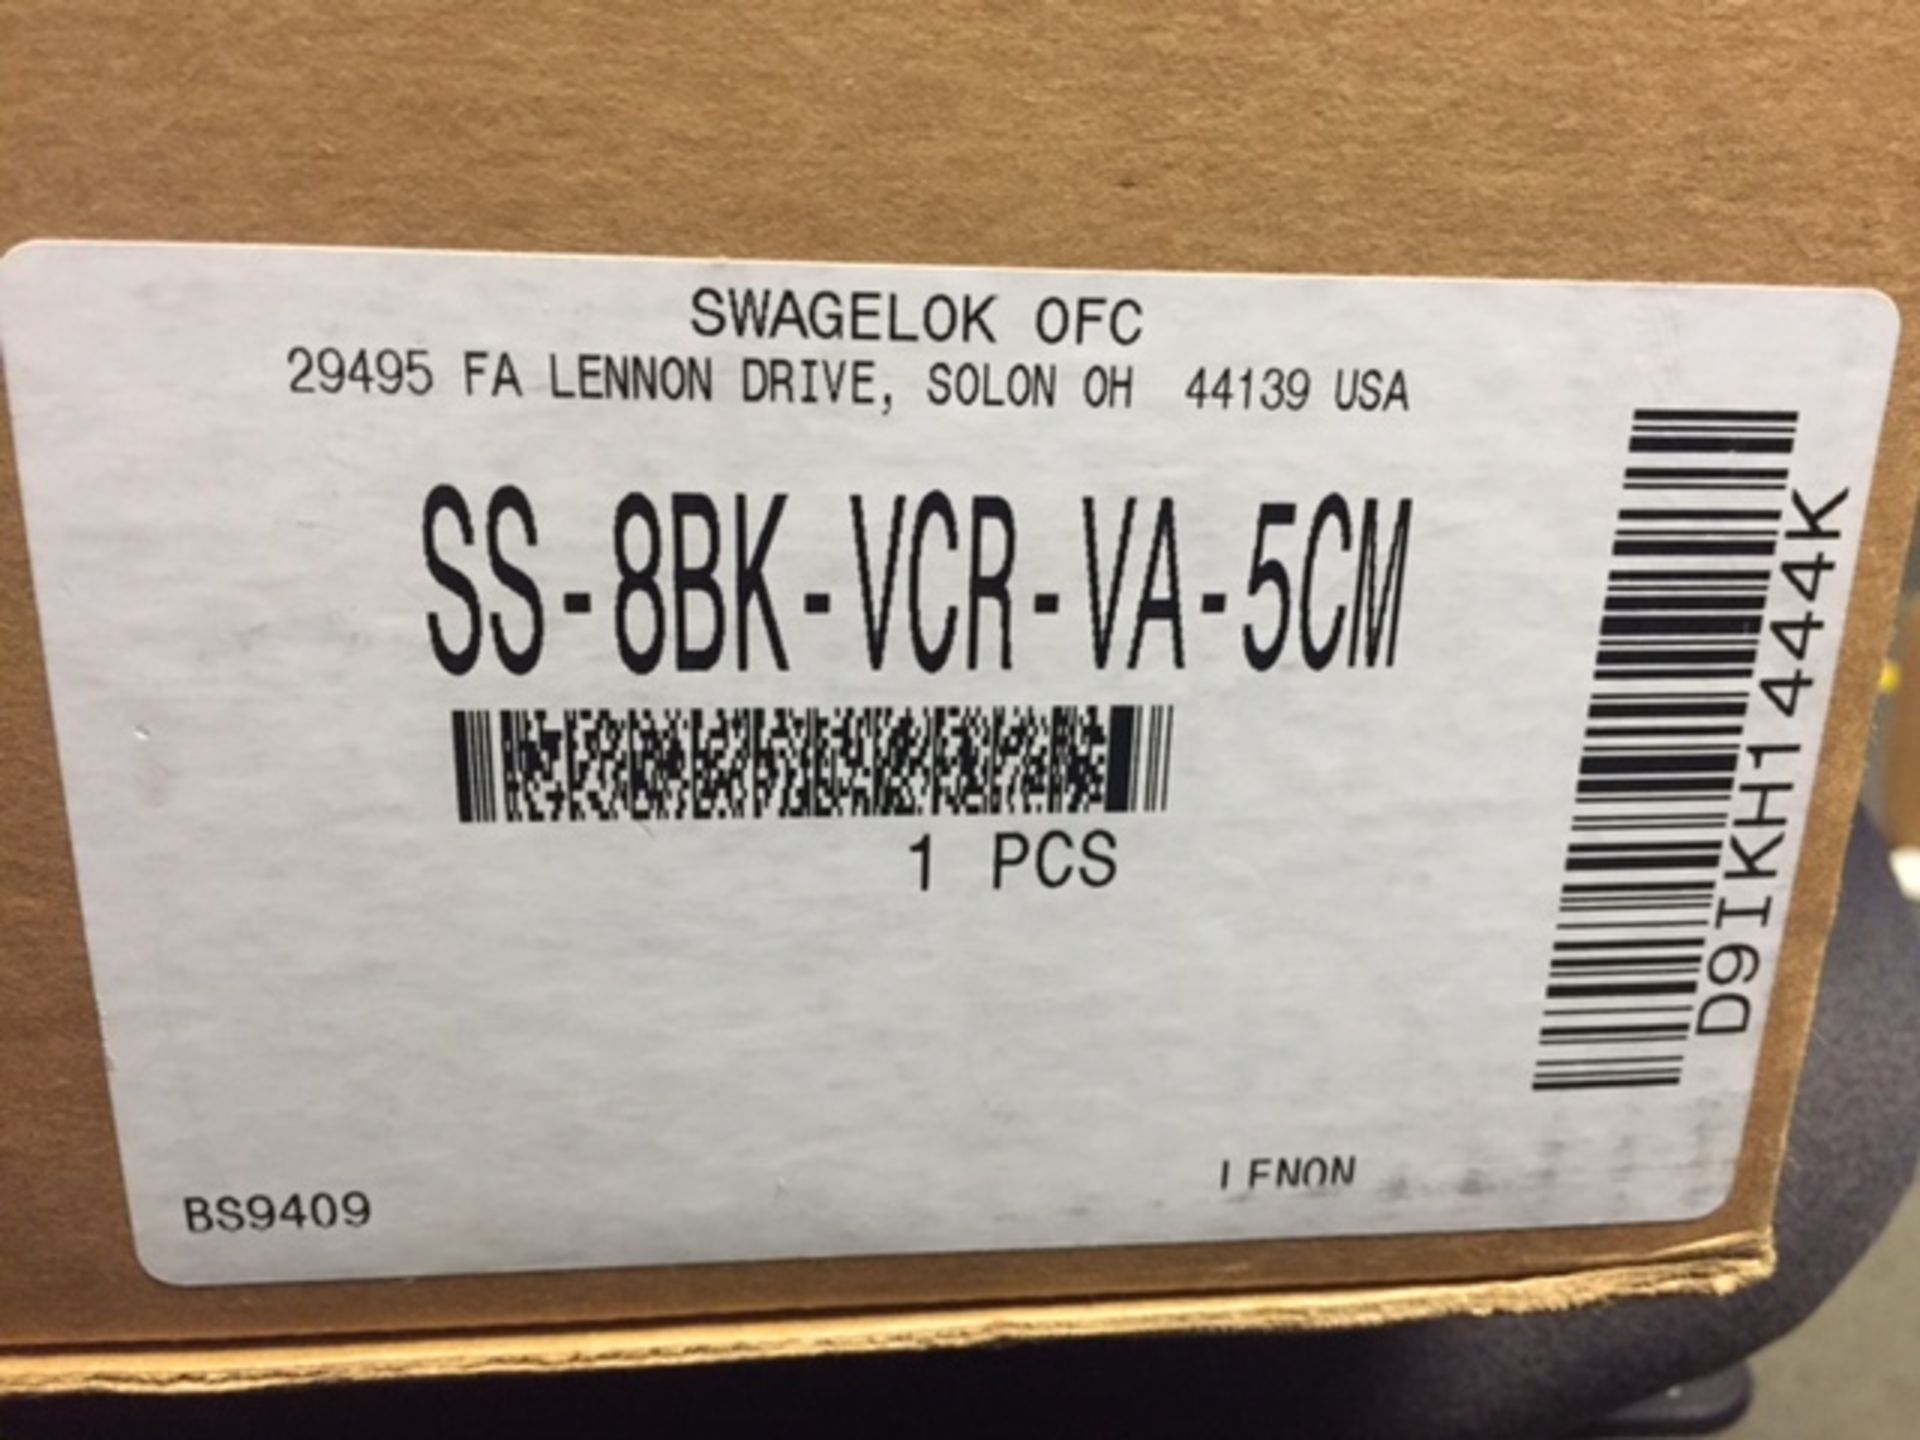 NEW LOT OF 2 SWAGELOK PRESSURE ACTUATOR VALVE SS-8BK-VCR-VA-5CM - Image 3 of 4